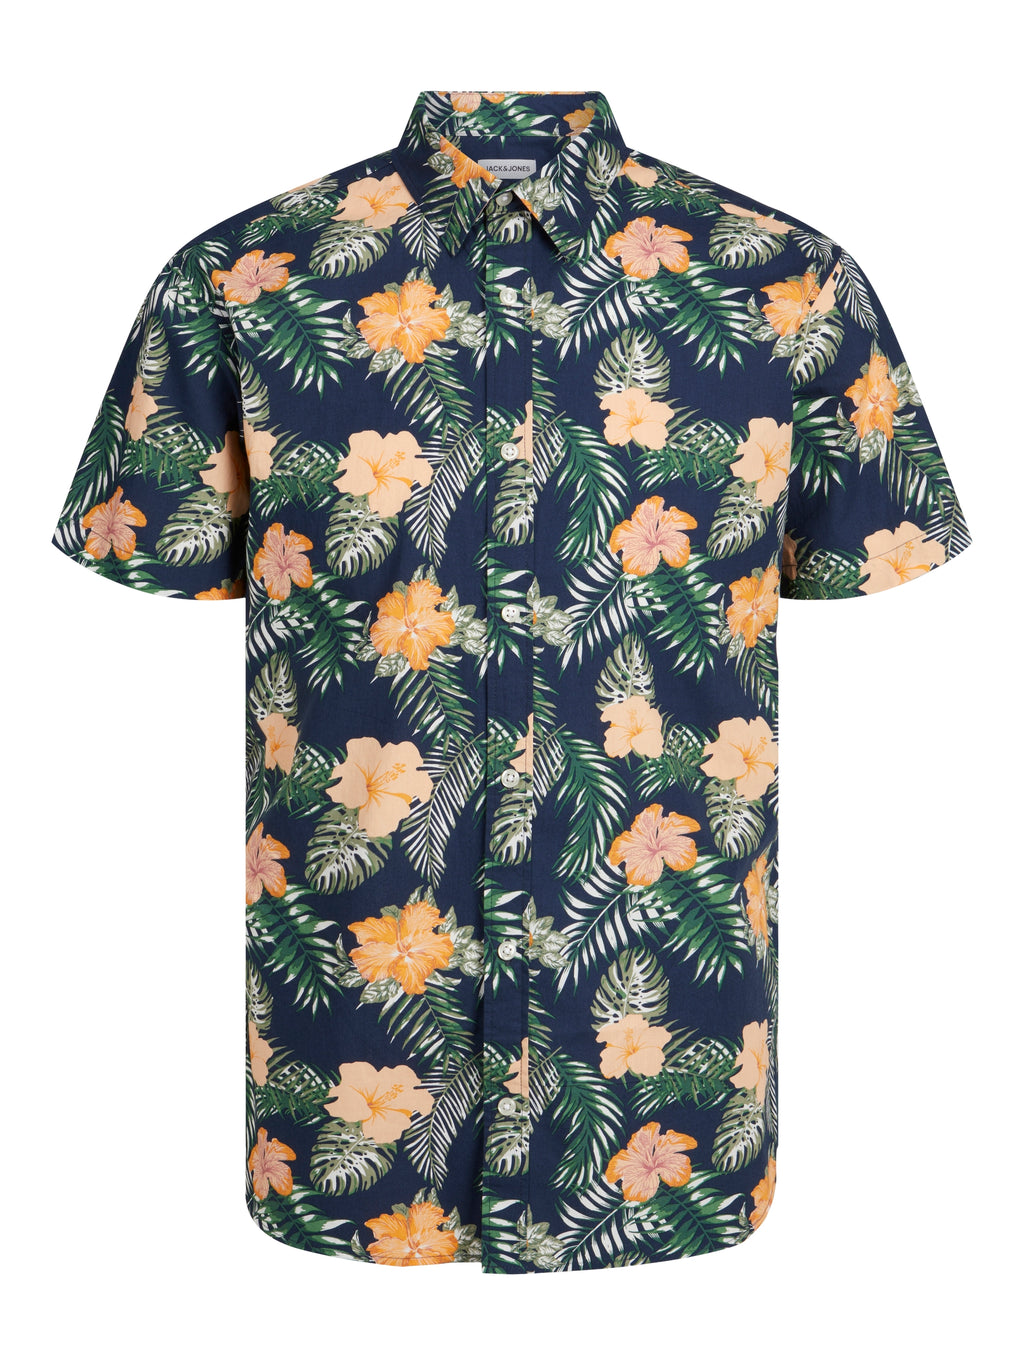 Jack & Jones Chill AOP Hawaiian Shirt Navy - Raw Menswear